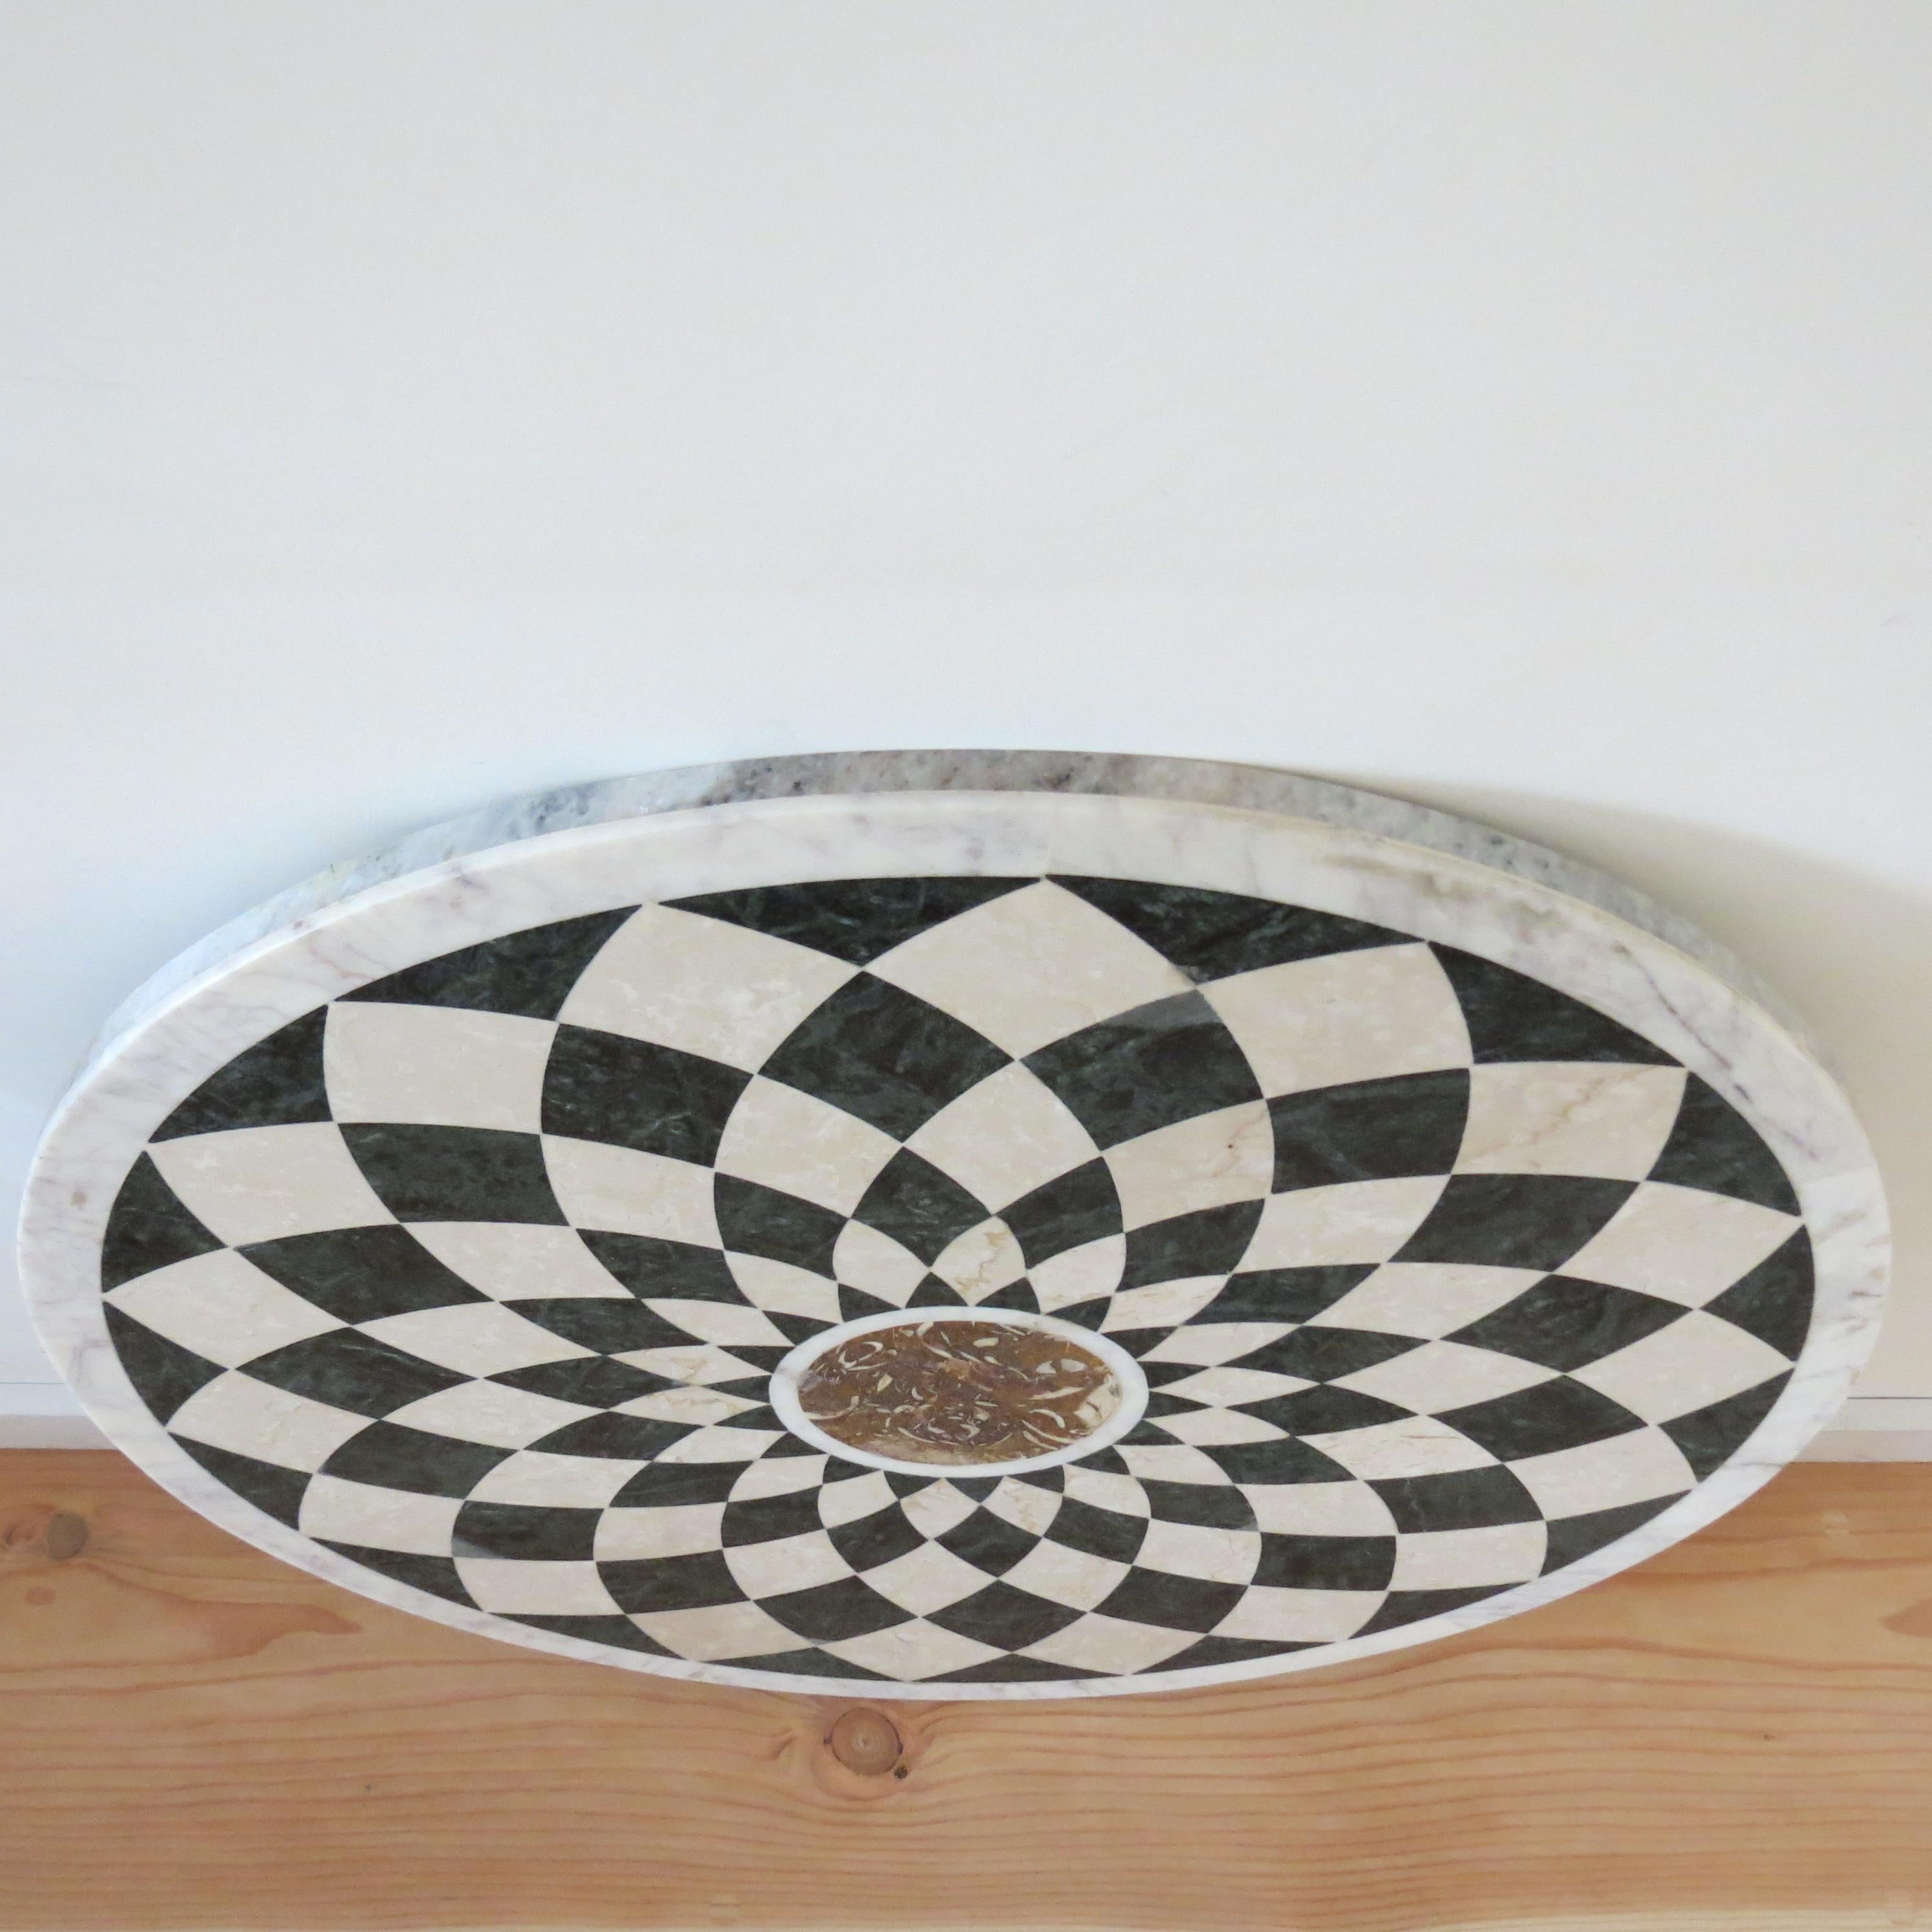 Hollywood Regency Pietra Dura Italian Marble Table Top Geometric Pattern Black White Monochrome